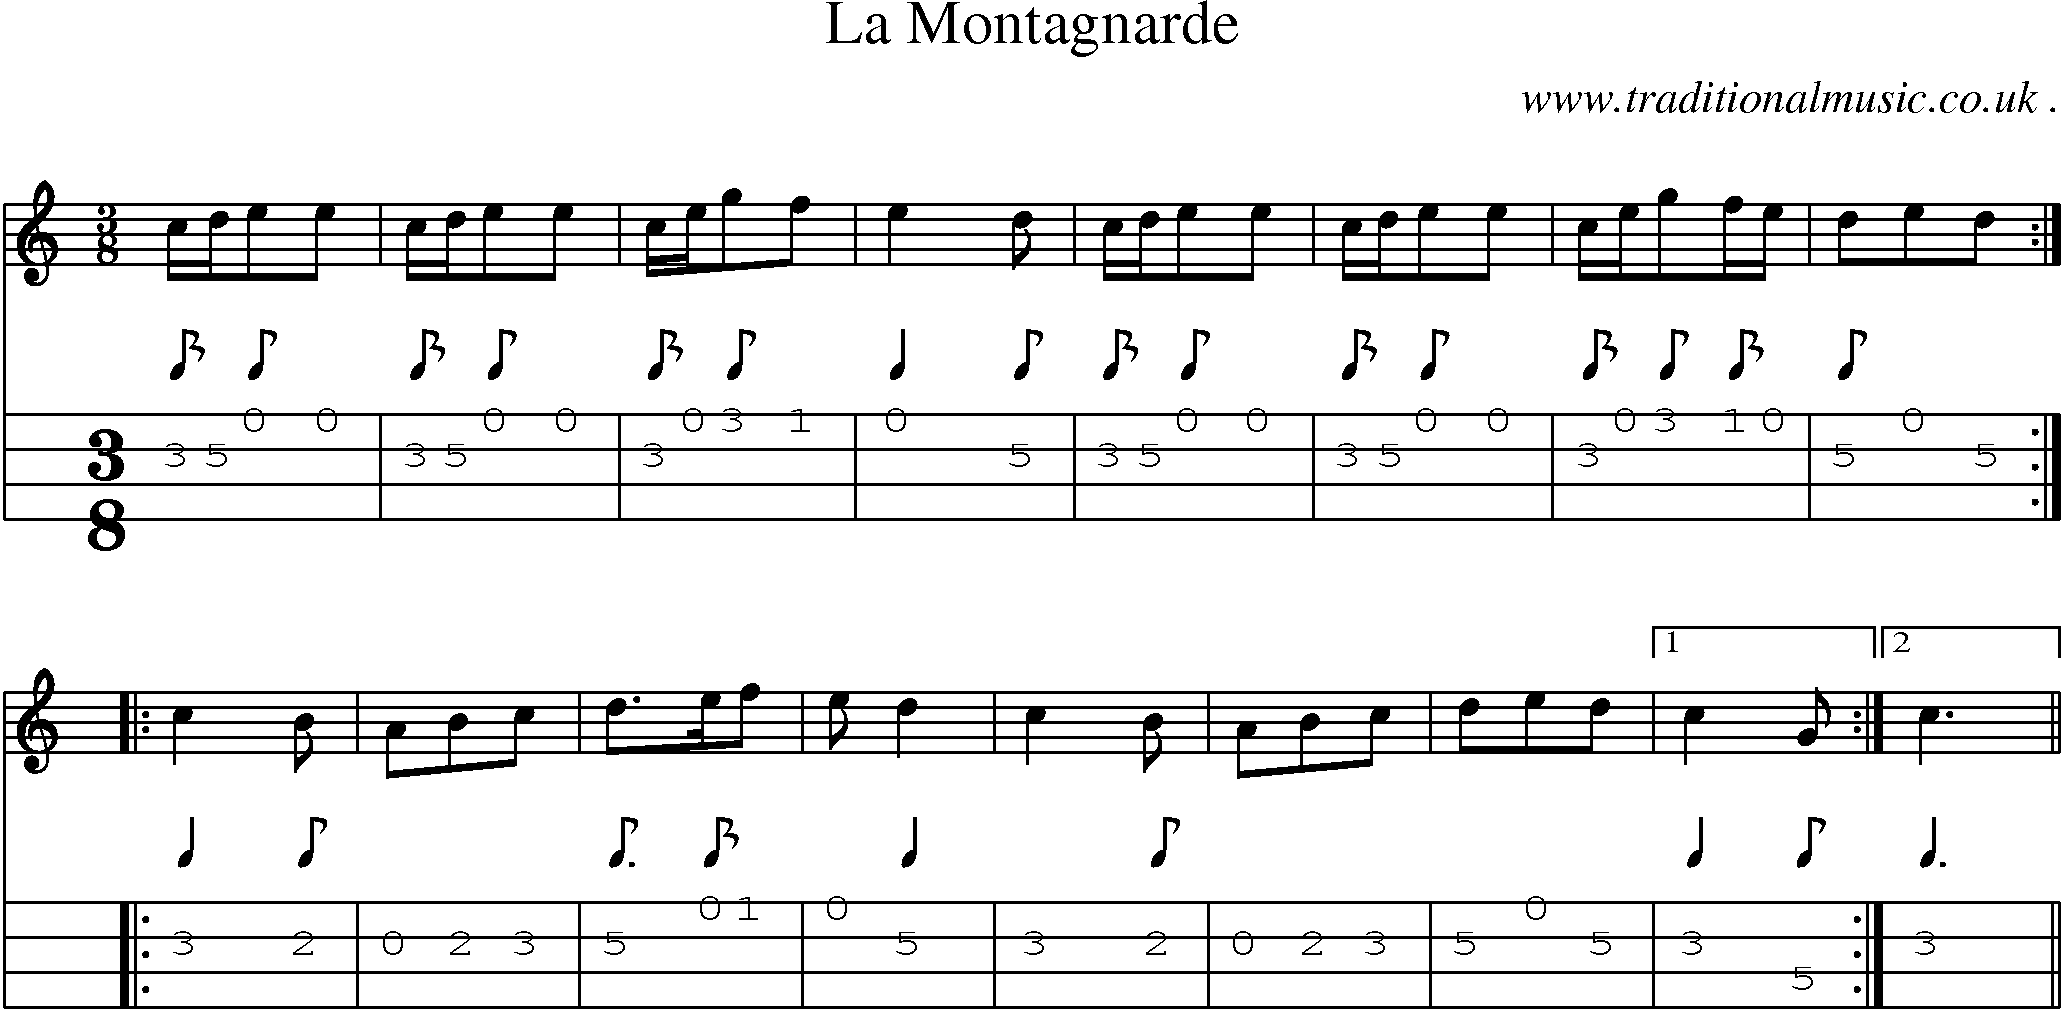 Sheet-Music and Mandolin Tabs for La Montagnarde